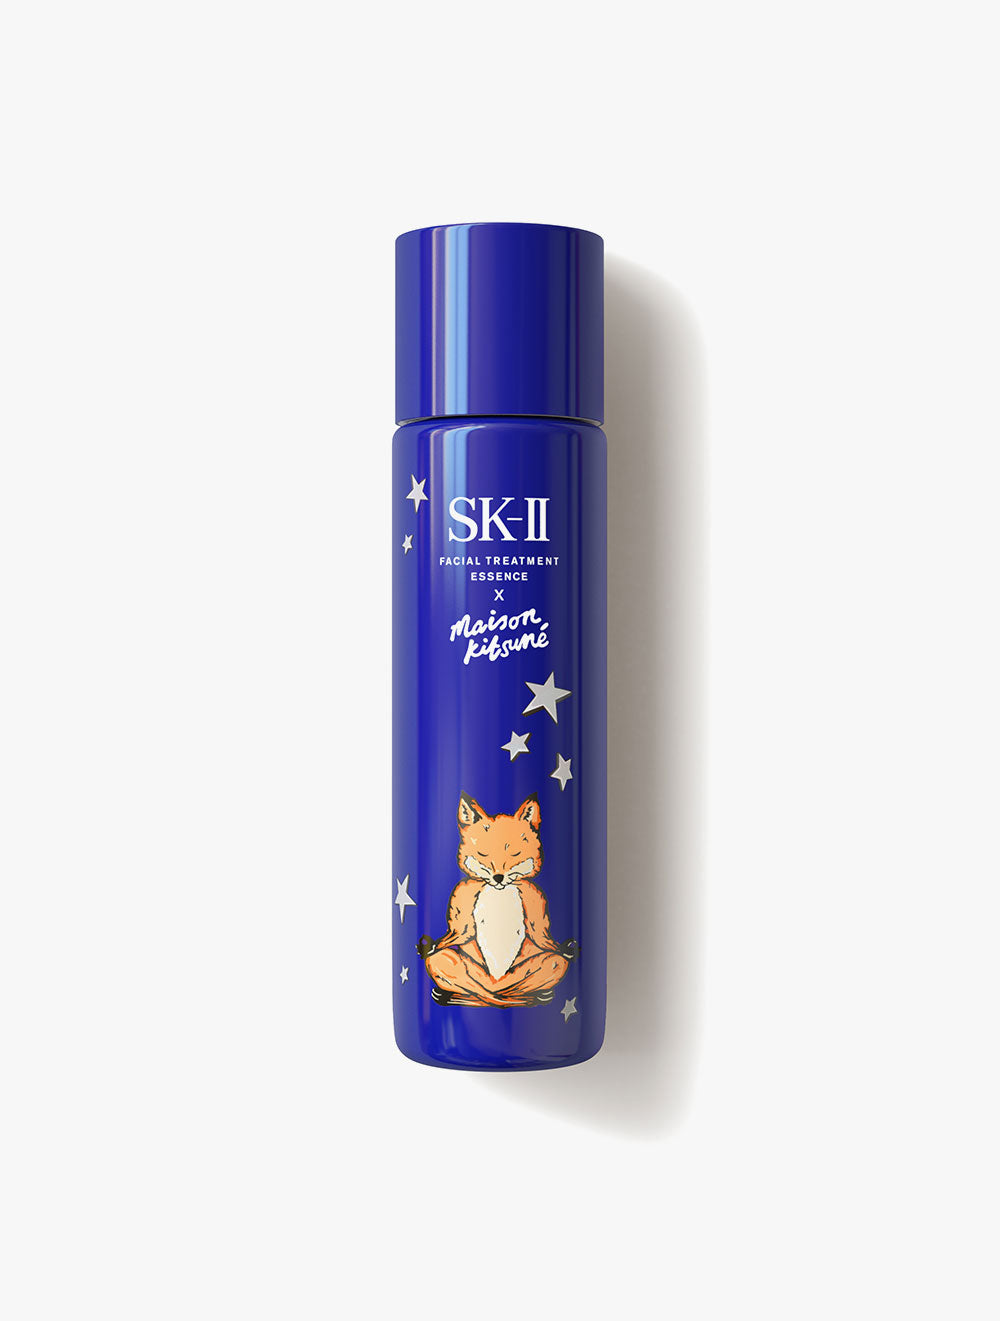 Brand : SK-II – SOGO Indonesia